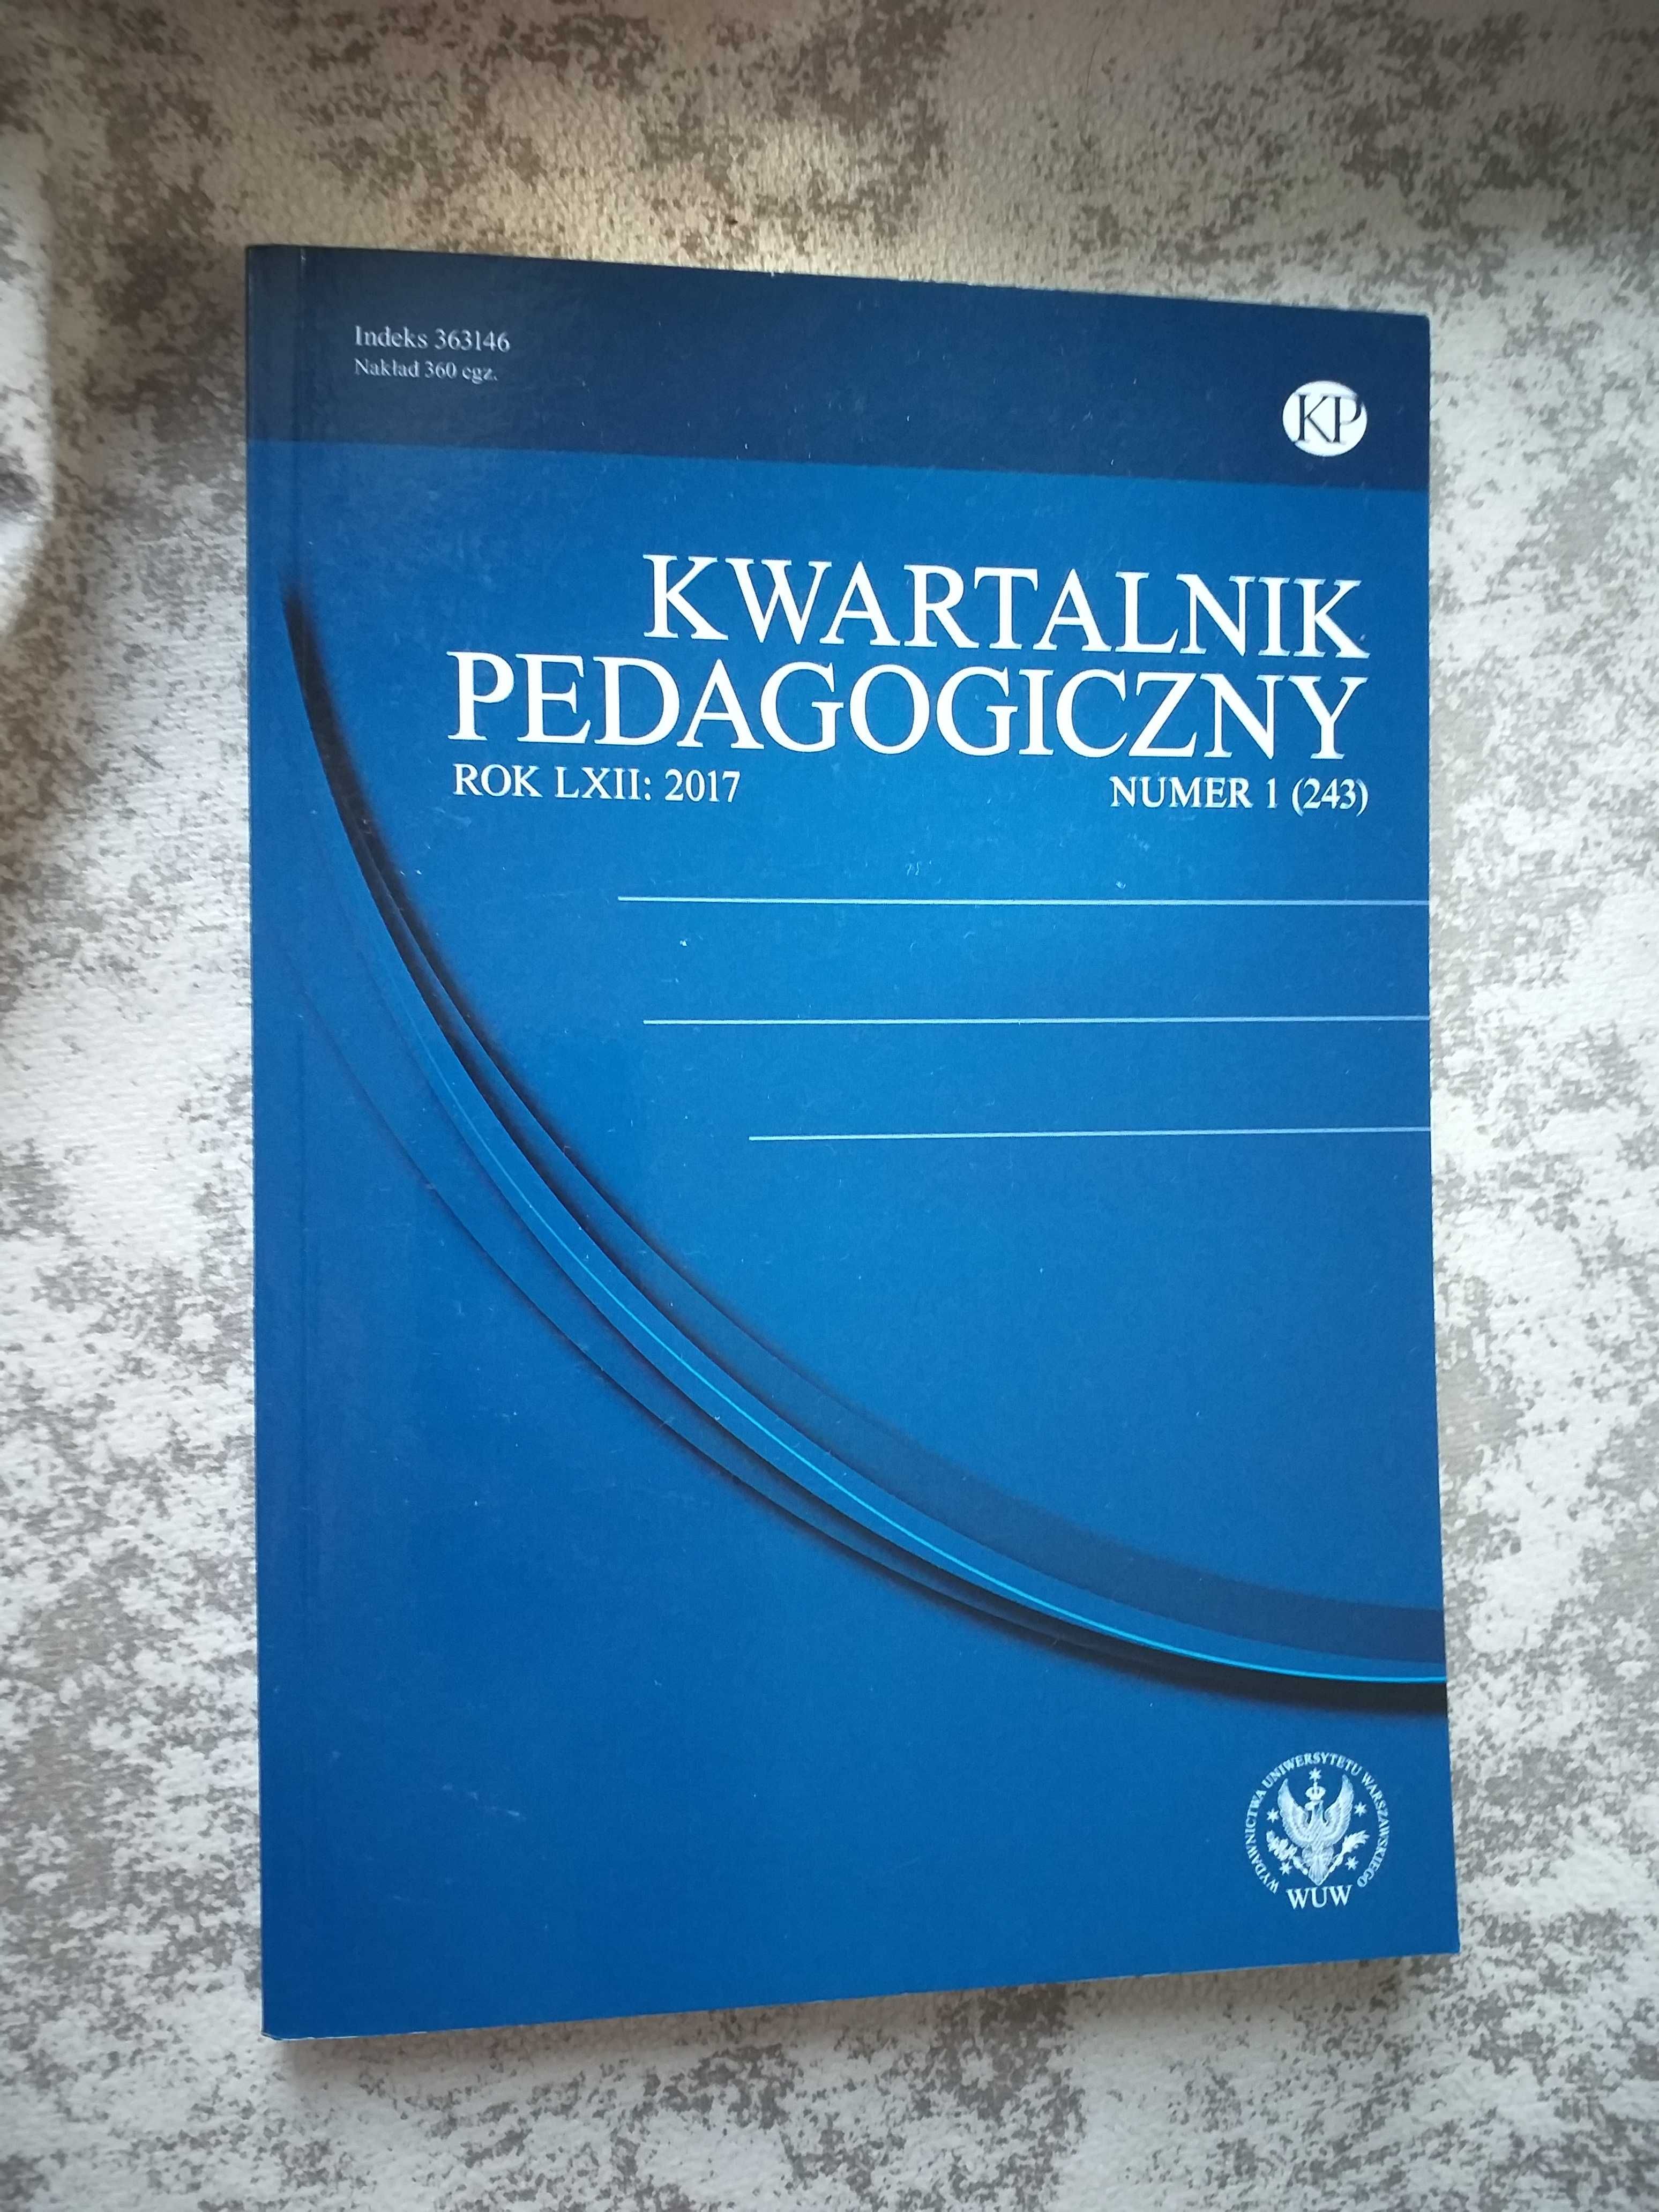 Kwartalnik Pedagogiczny, numer1 (243), Filozofia a pedagogika